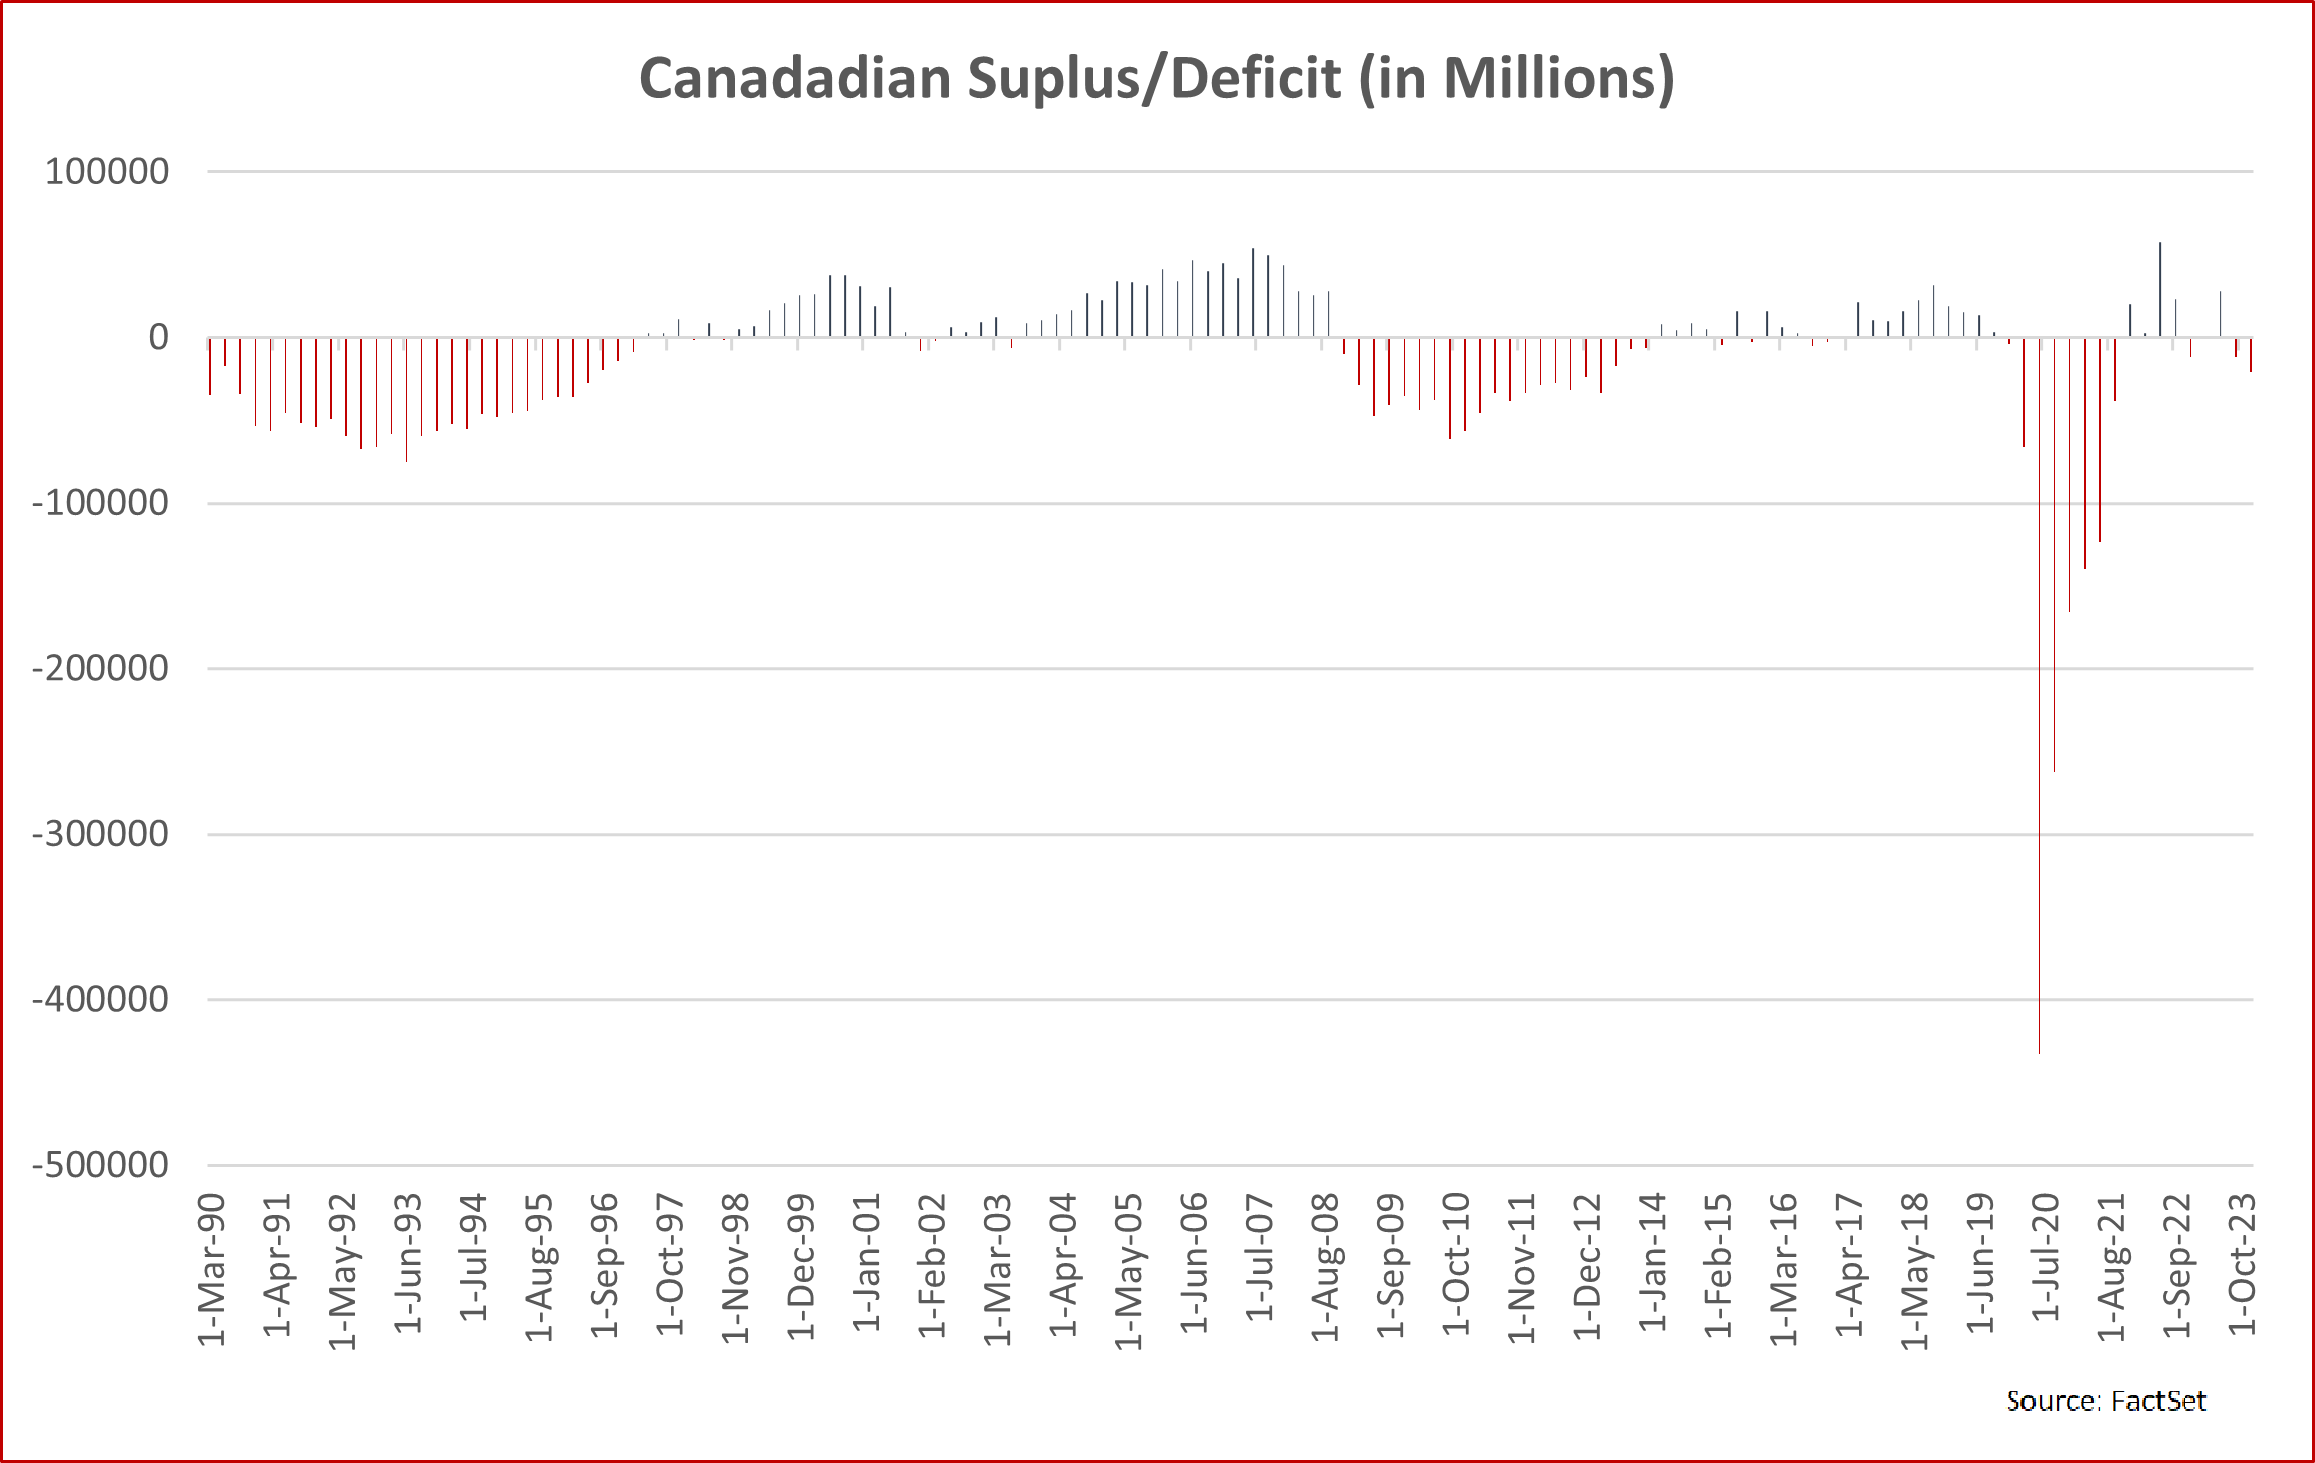 Canadian Surplus and Deficit graph.